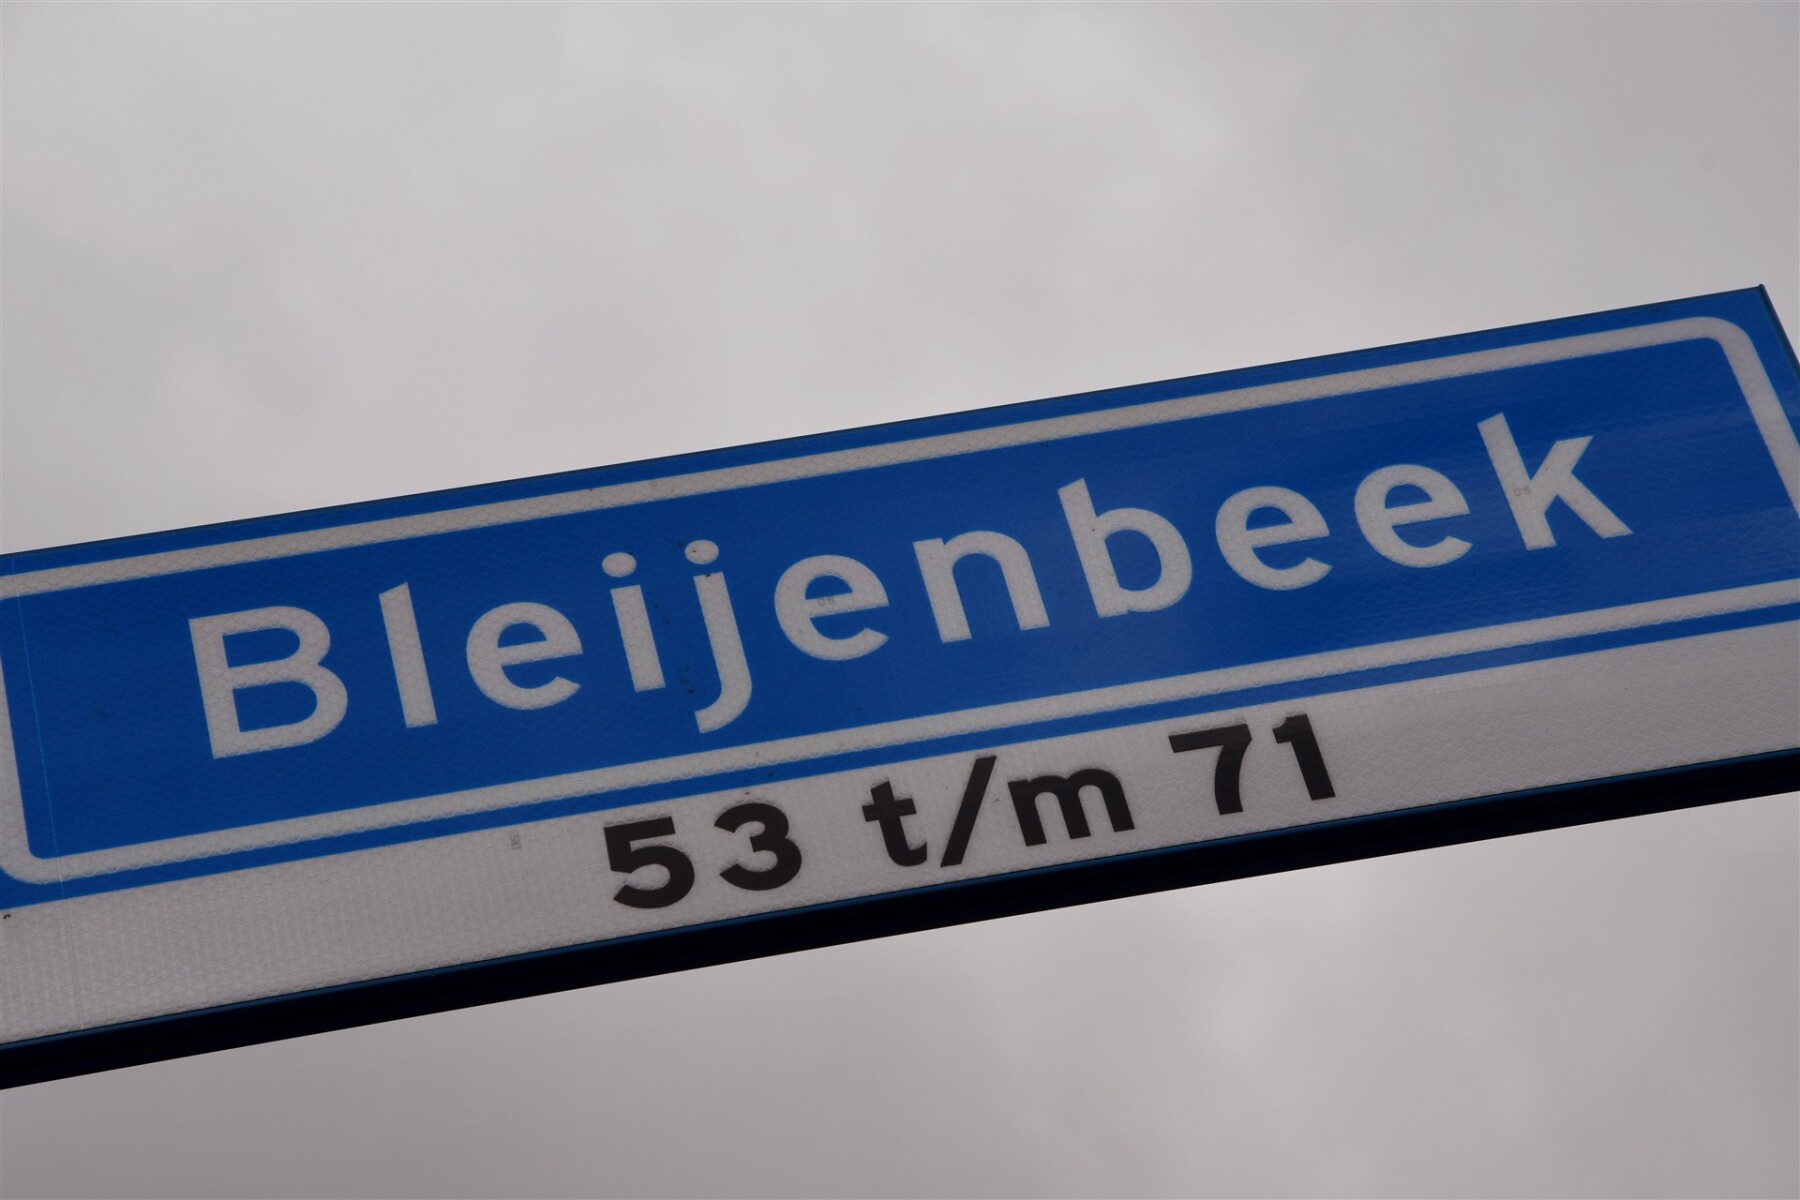 Bleijenbeek 33